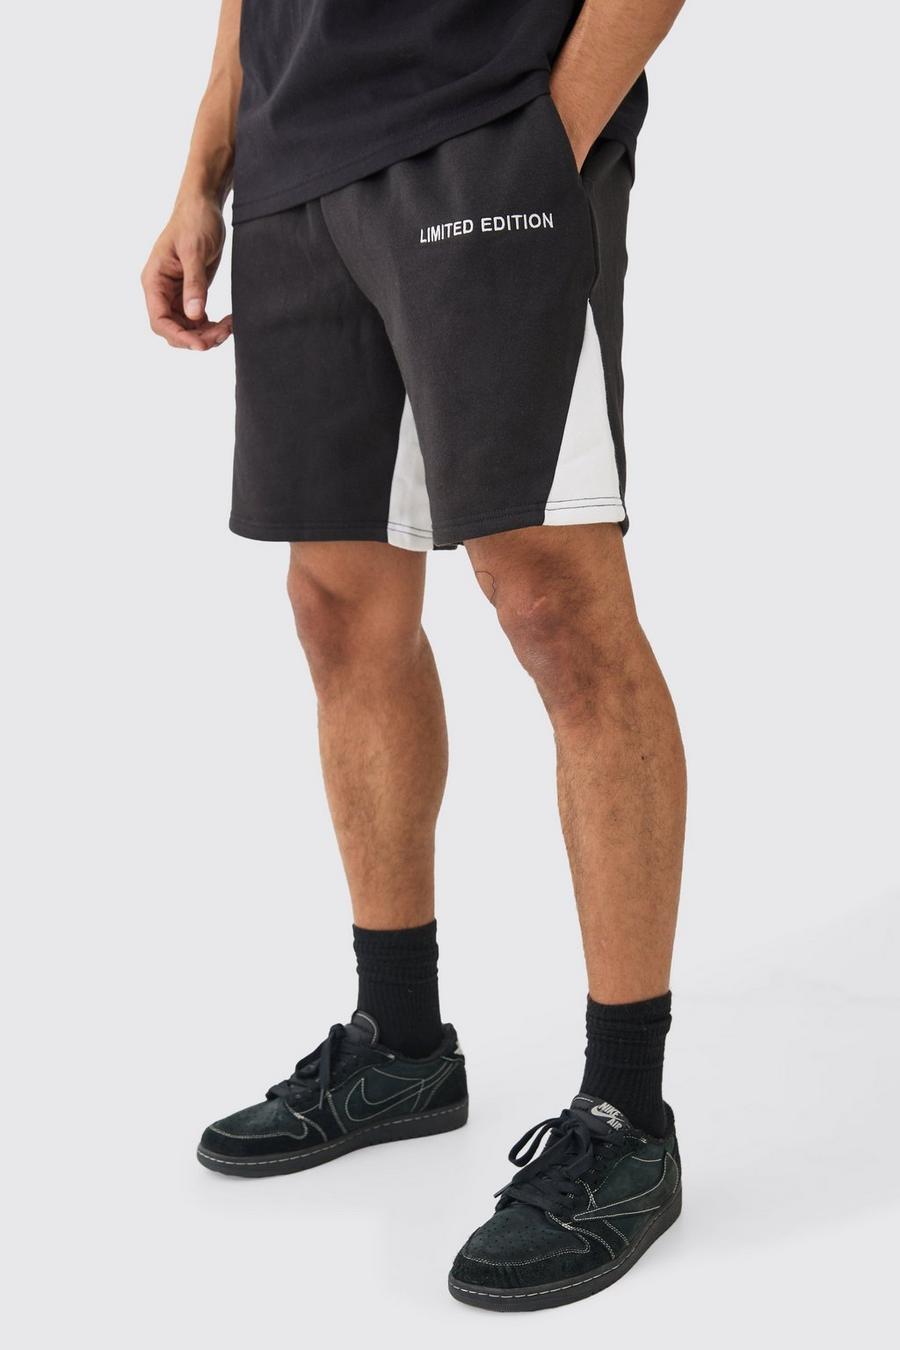 Lockere Limited Edition Shorts, Black image number 1